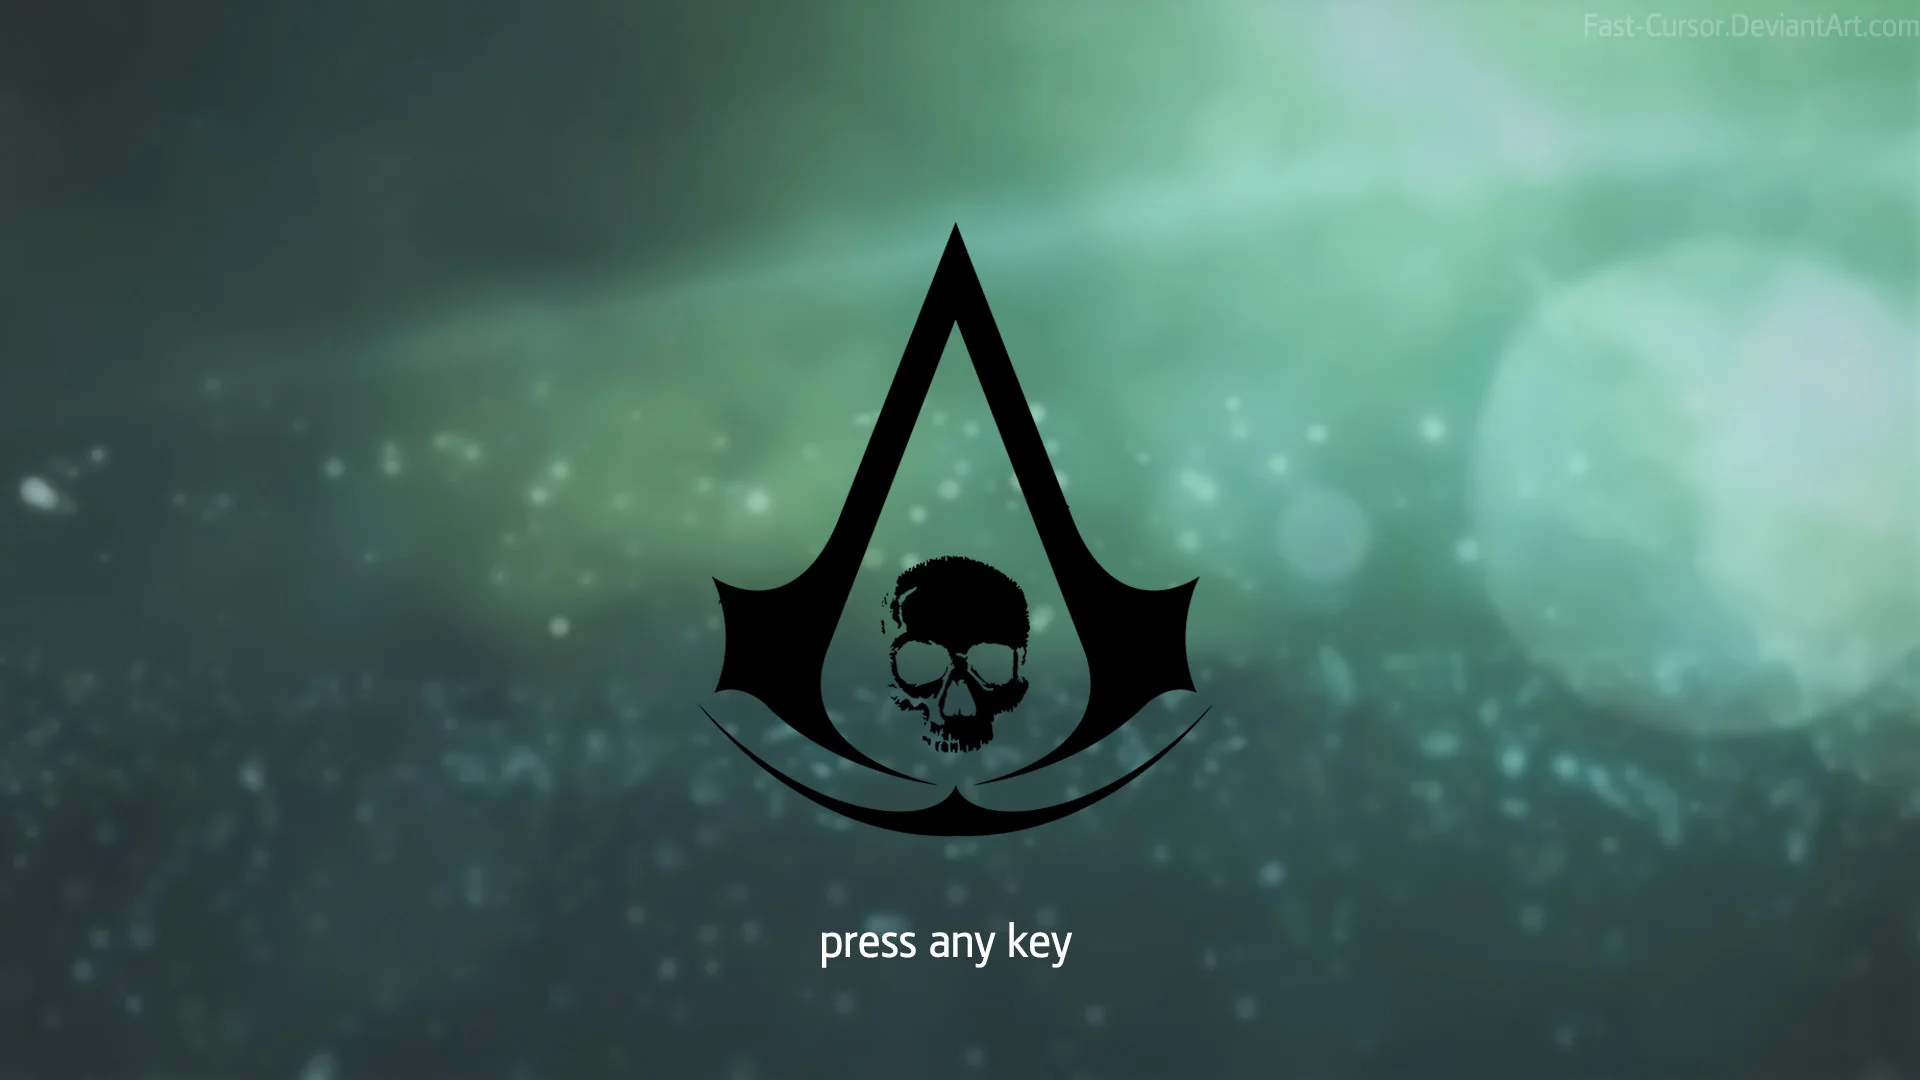 Assassins Creed 4 Black Flag – Main Menu Logo by Fast Cursor